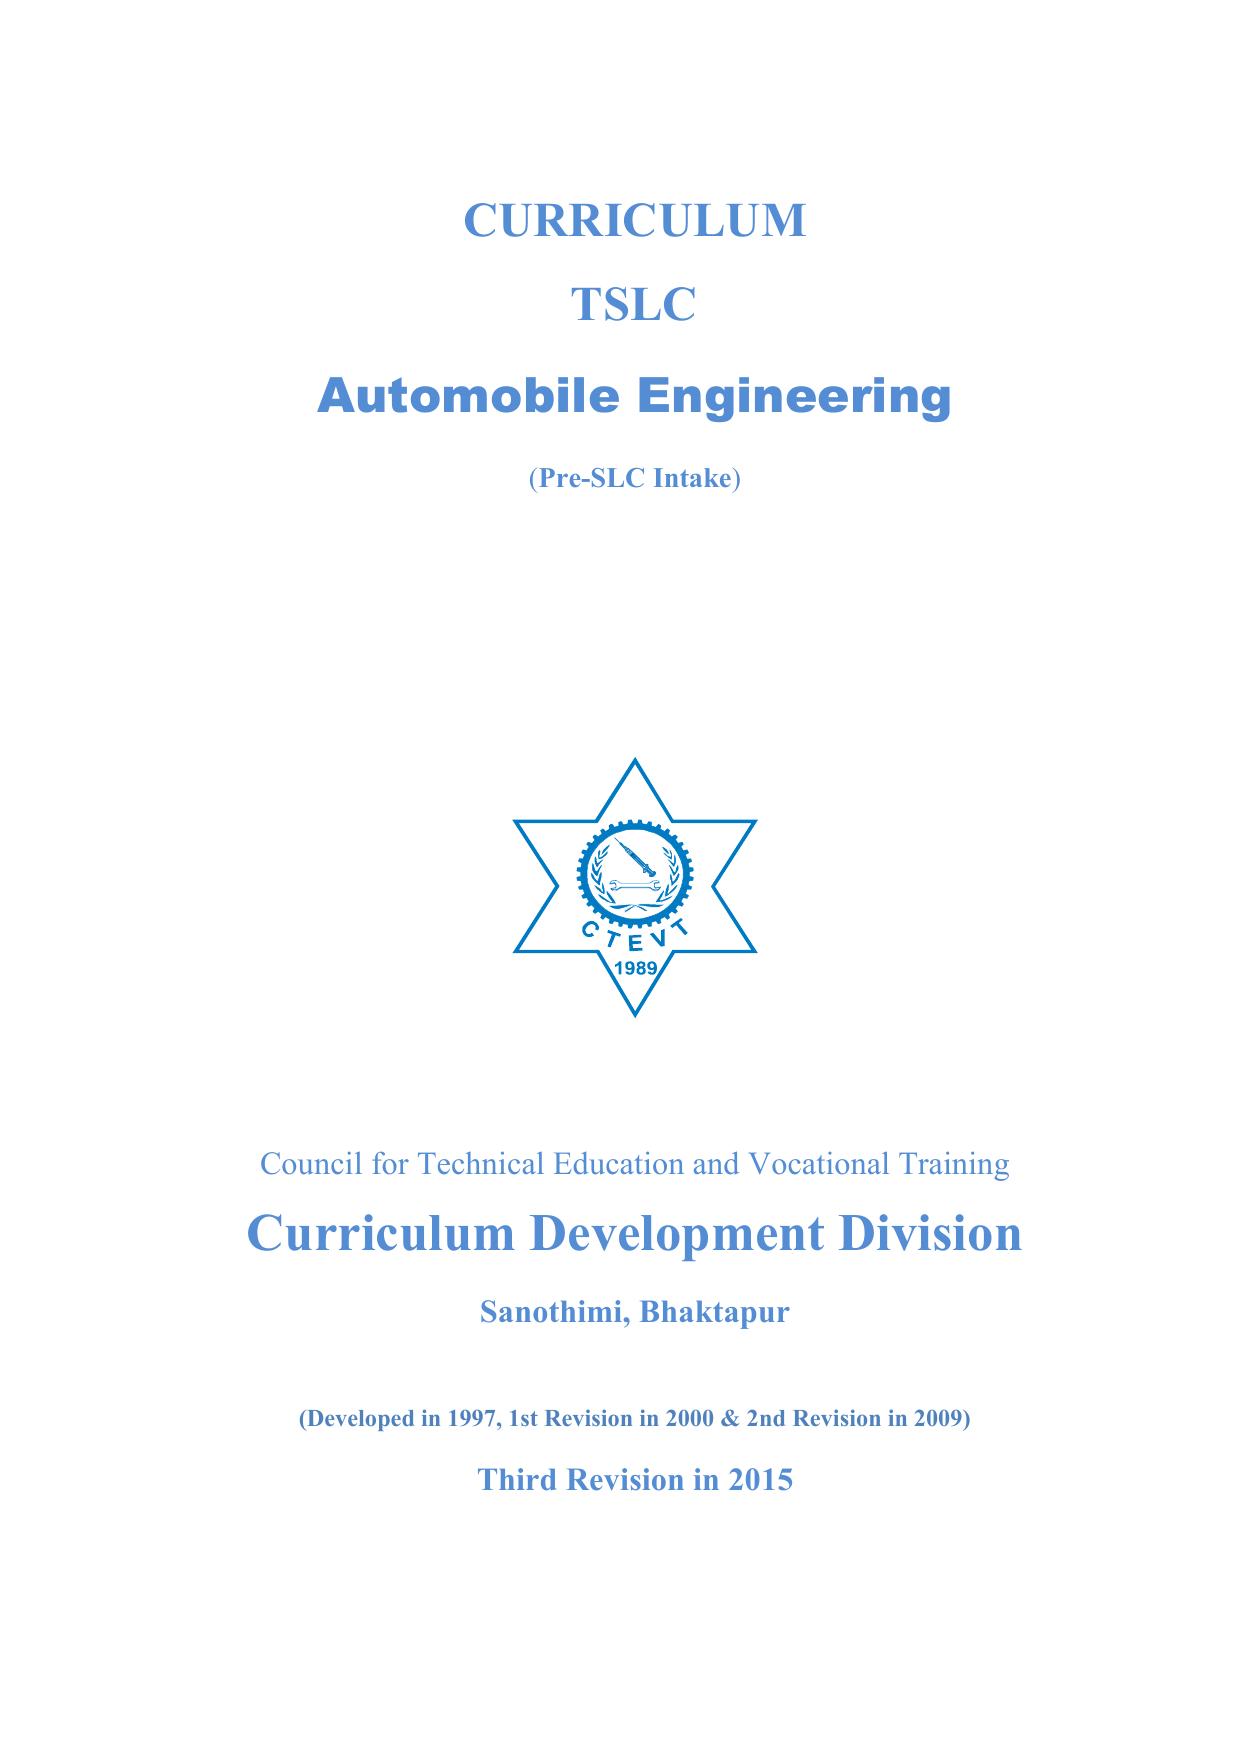 TSLC in Automobile Engineering Pre SLC, 2015